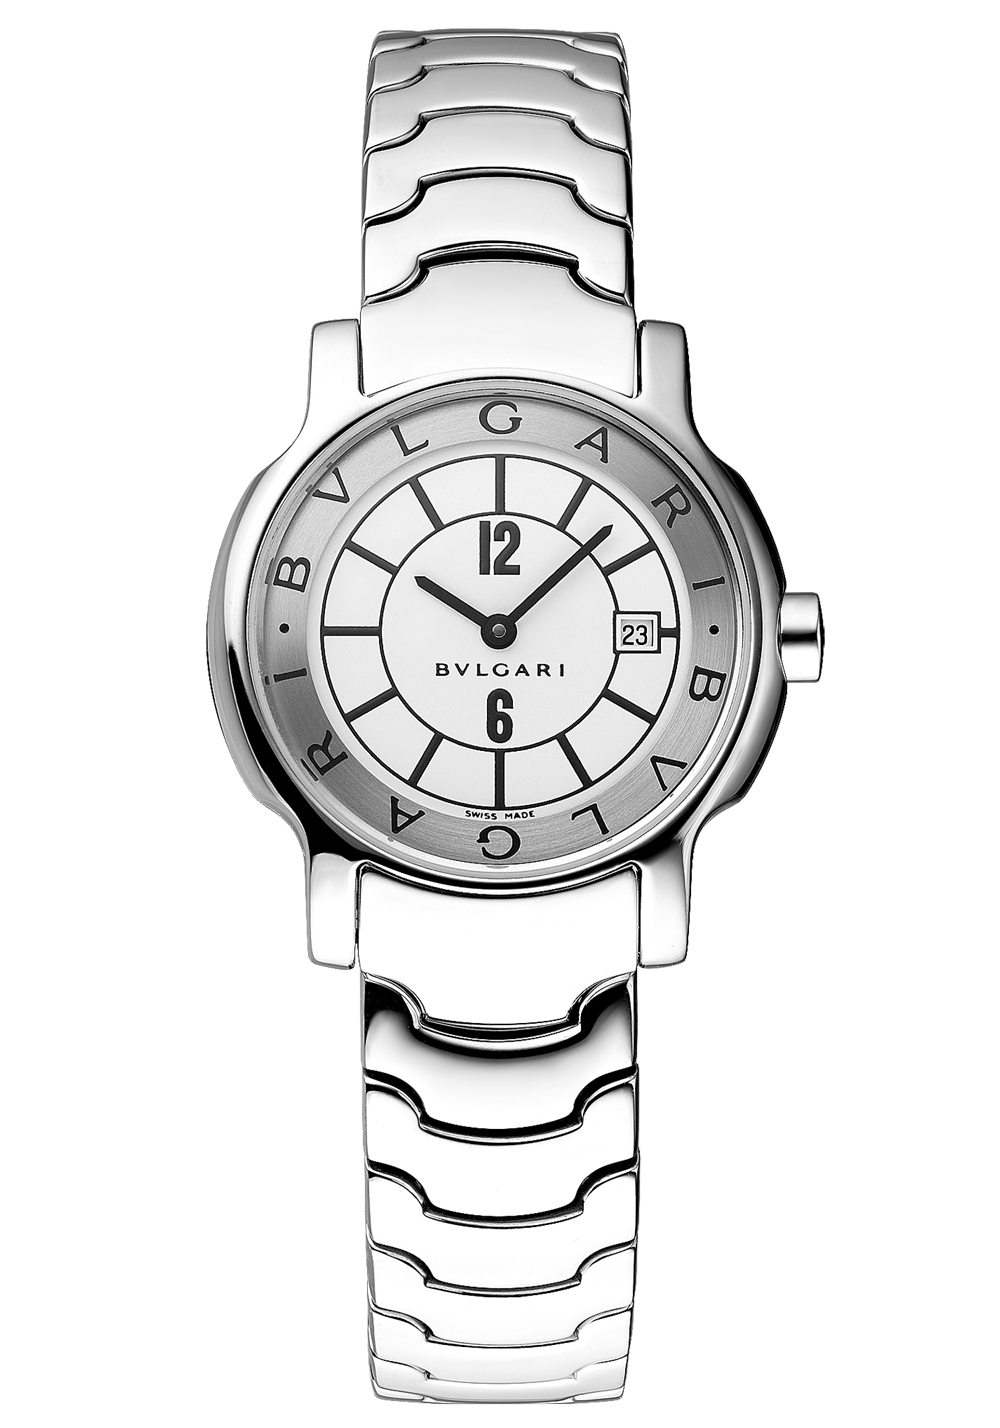 Швейцарские часы Bvlgari Solotempo ST 29 S(20071) №5